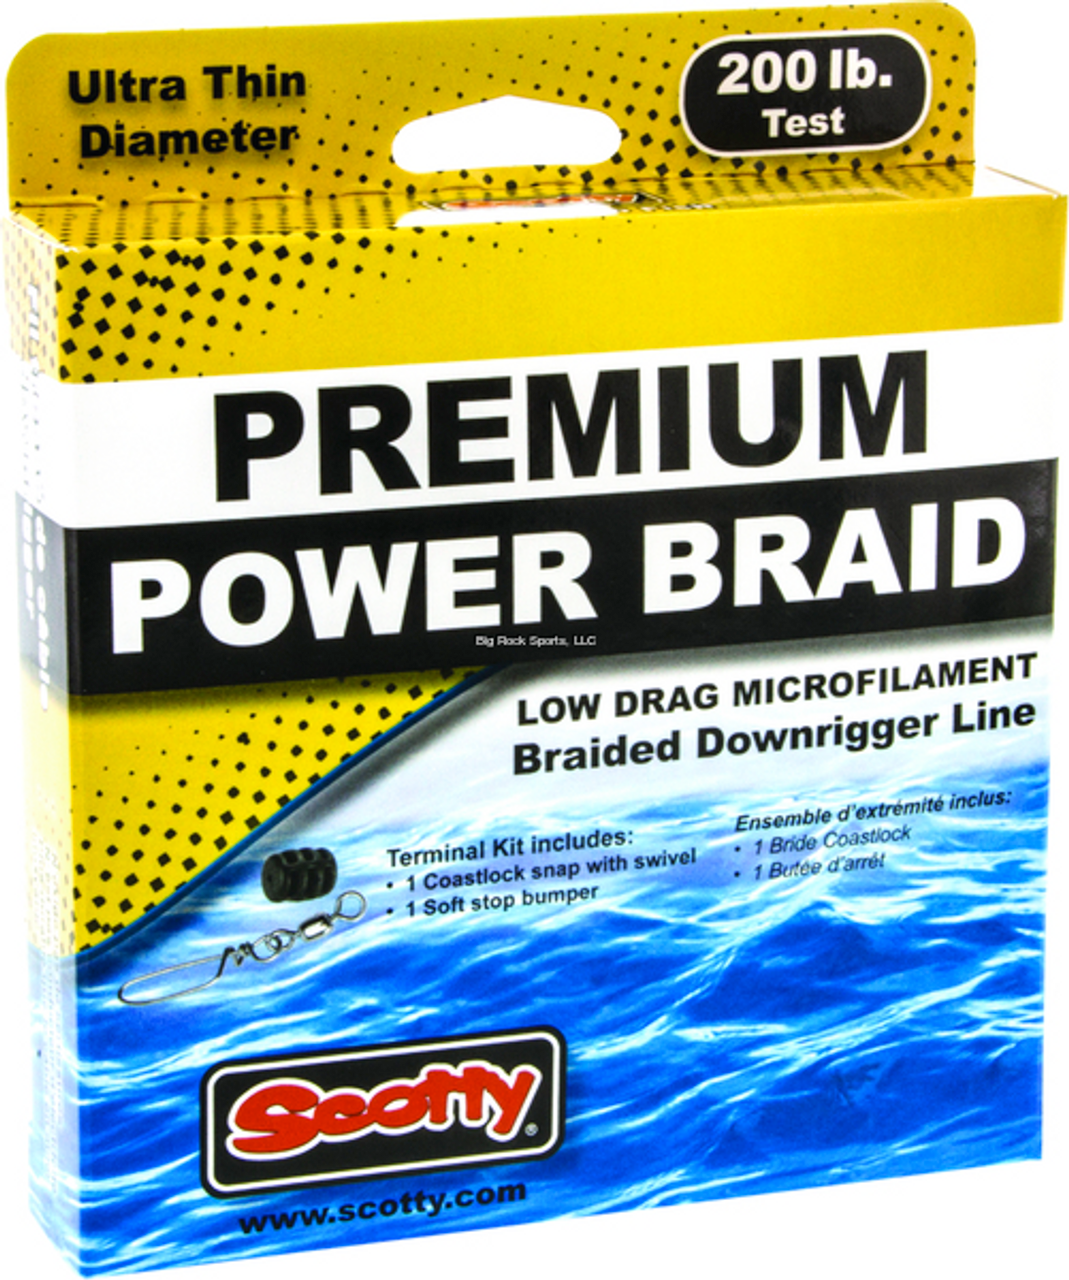 Scotty Premium Braided Downrigger Line, 200Lb, 300Ft Spool with Kit